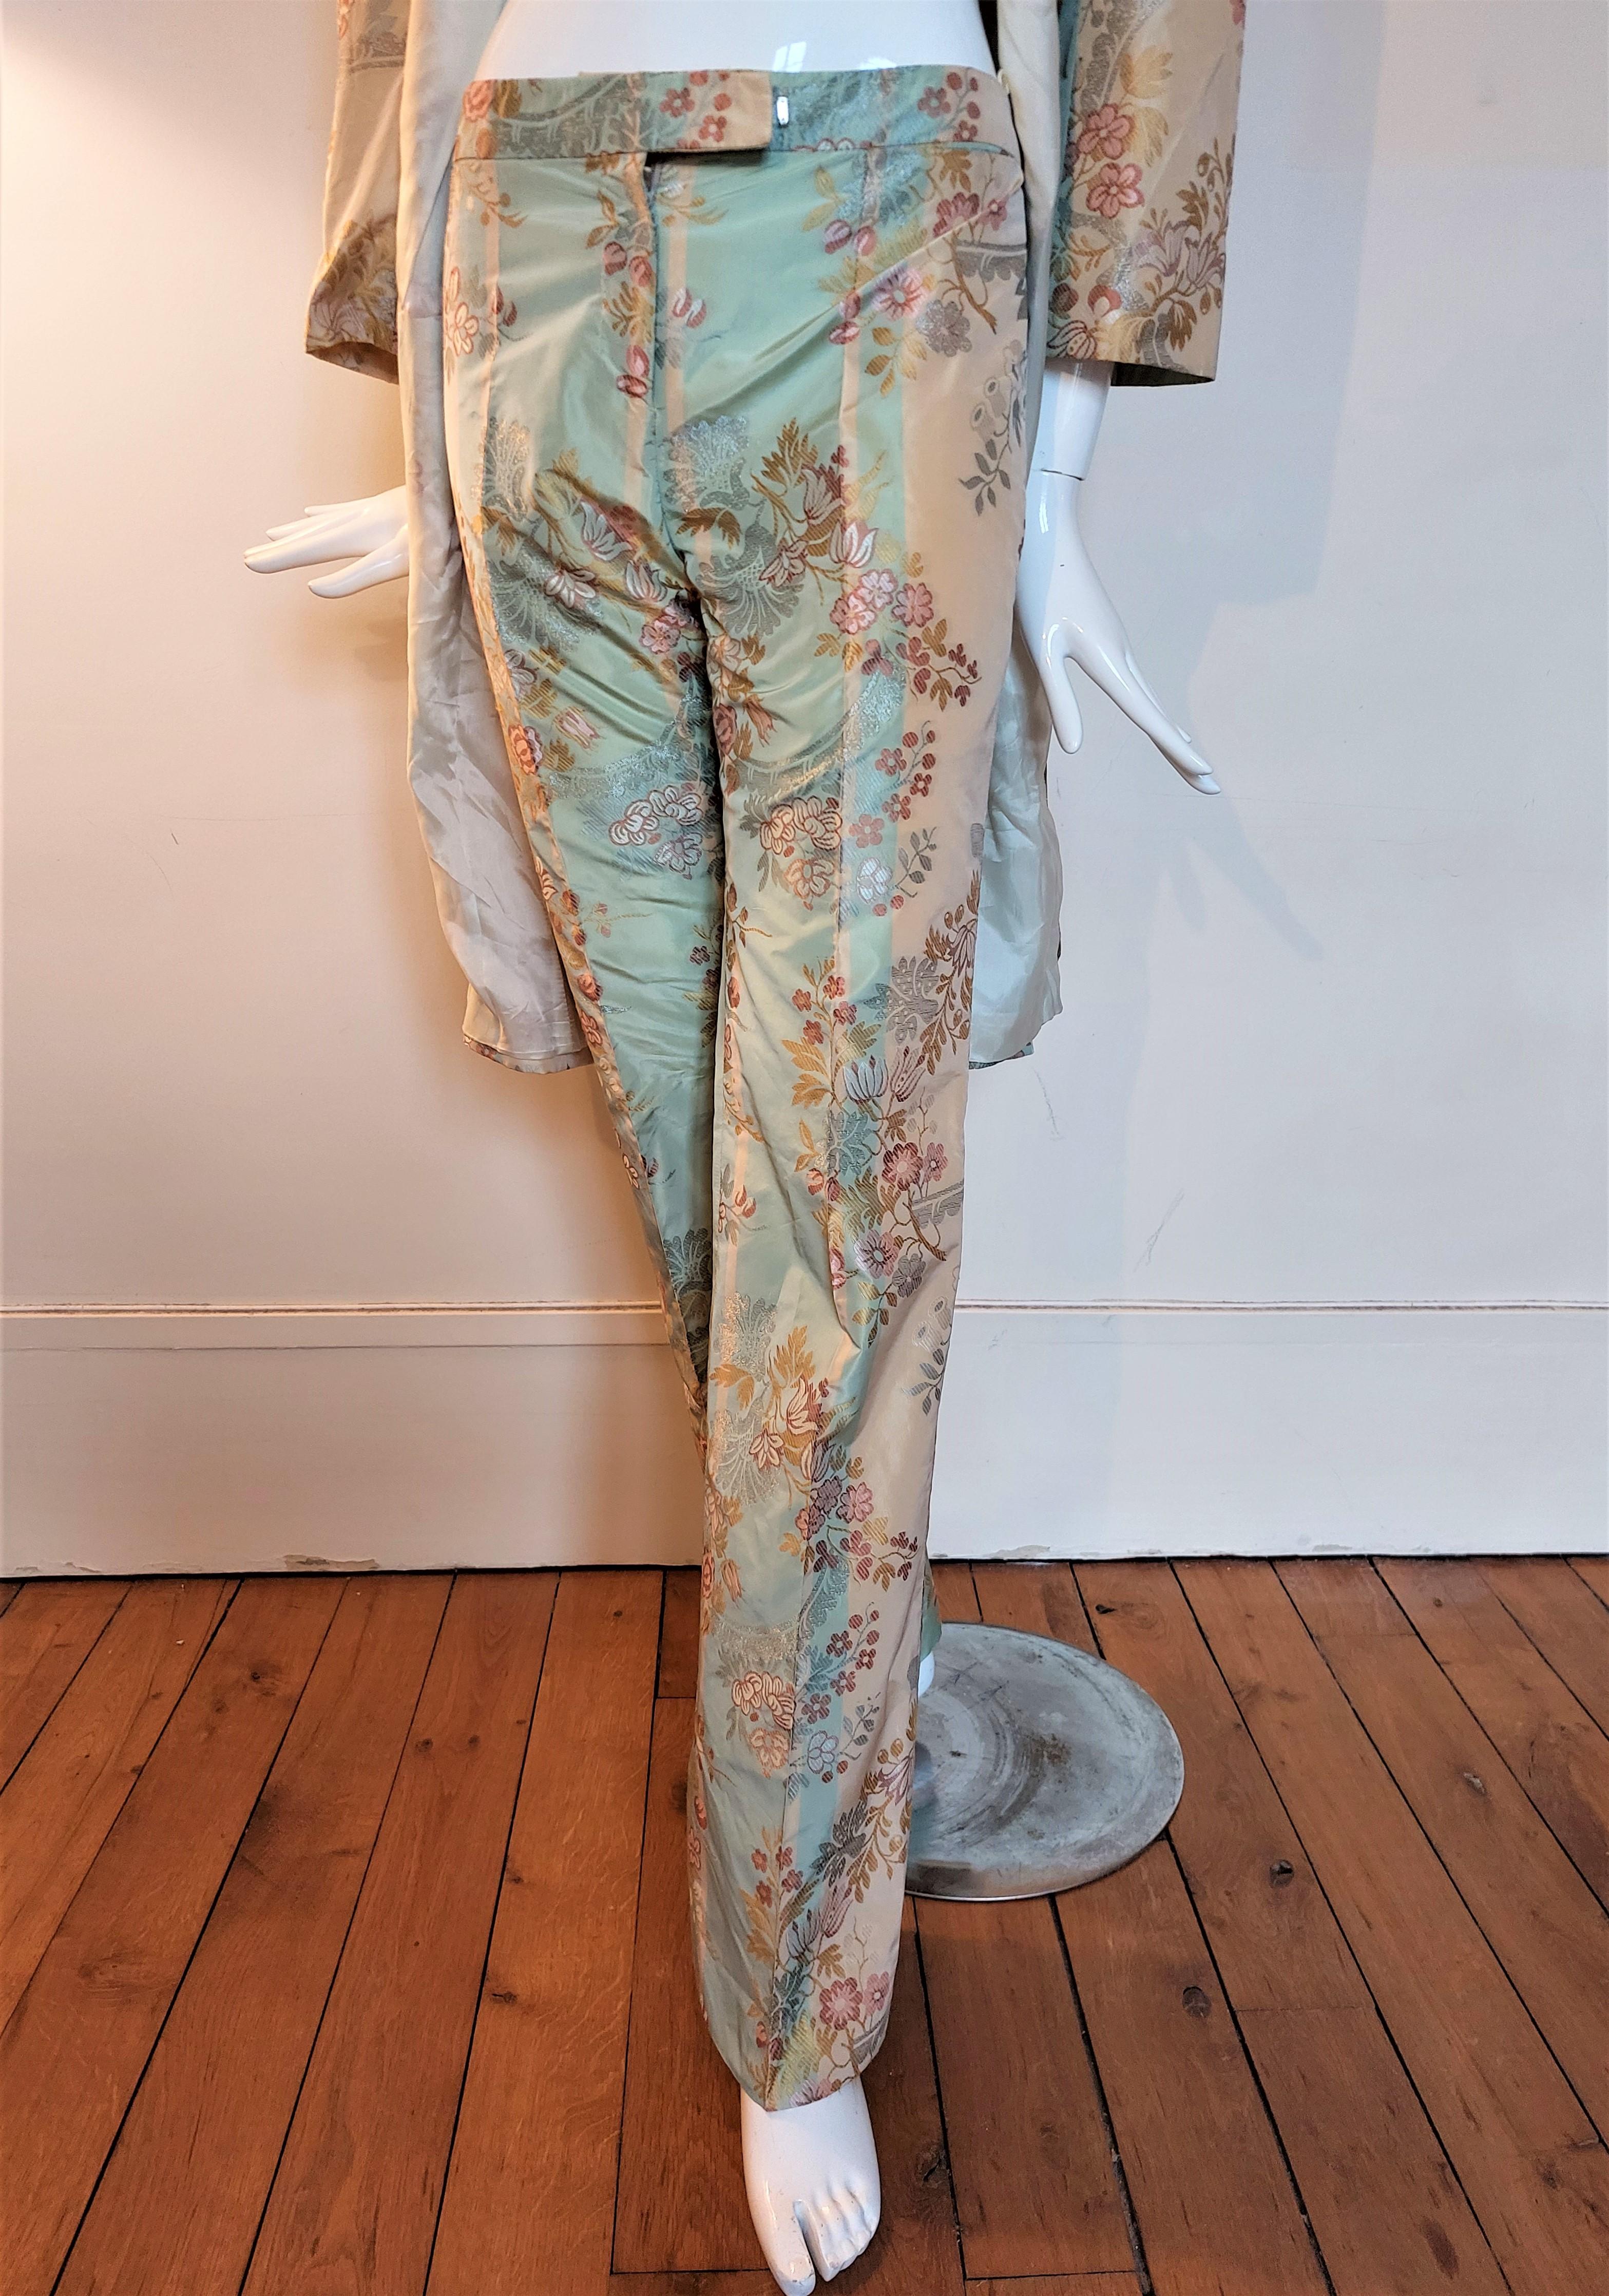 Alexander Mcqueen - Costume pantalon de pirate en brocart de soie « Shipwreck », années 2000 en vente 4